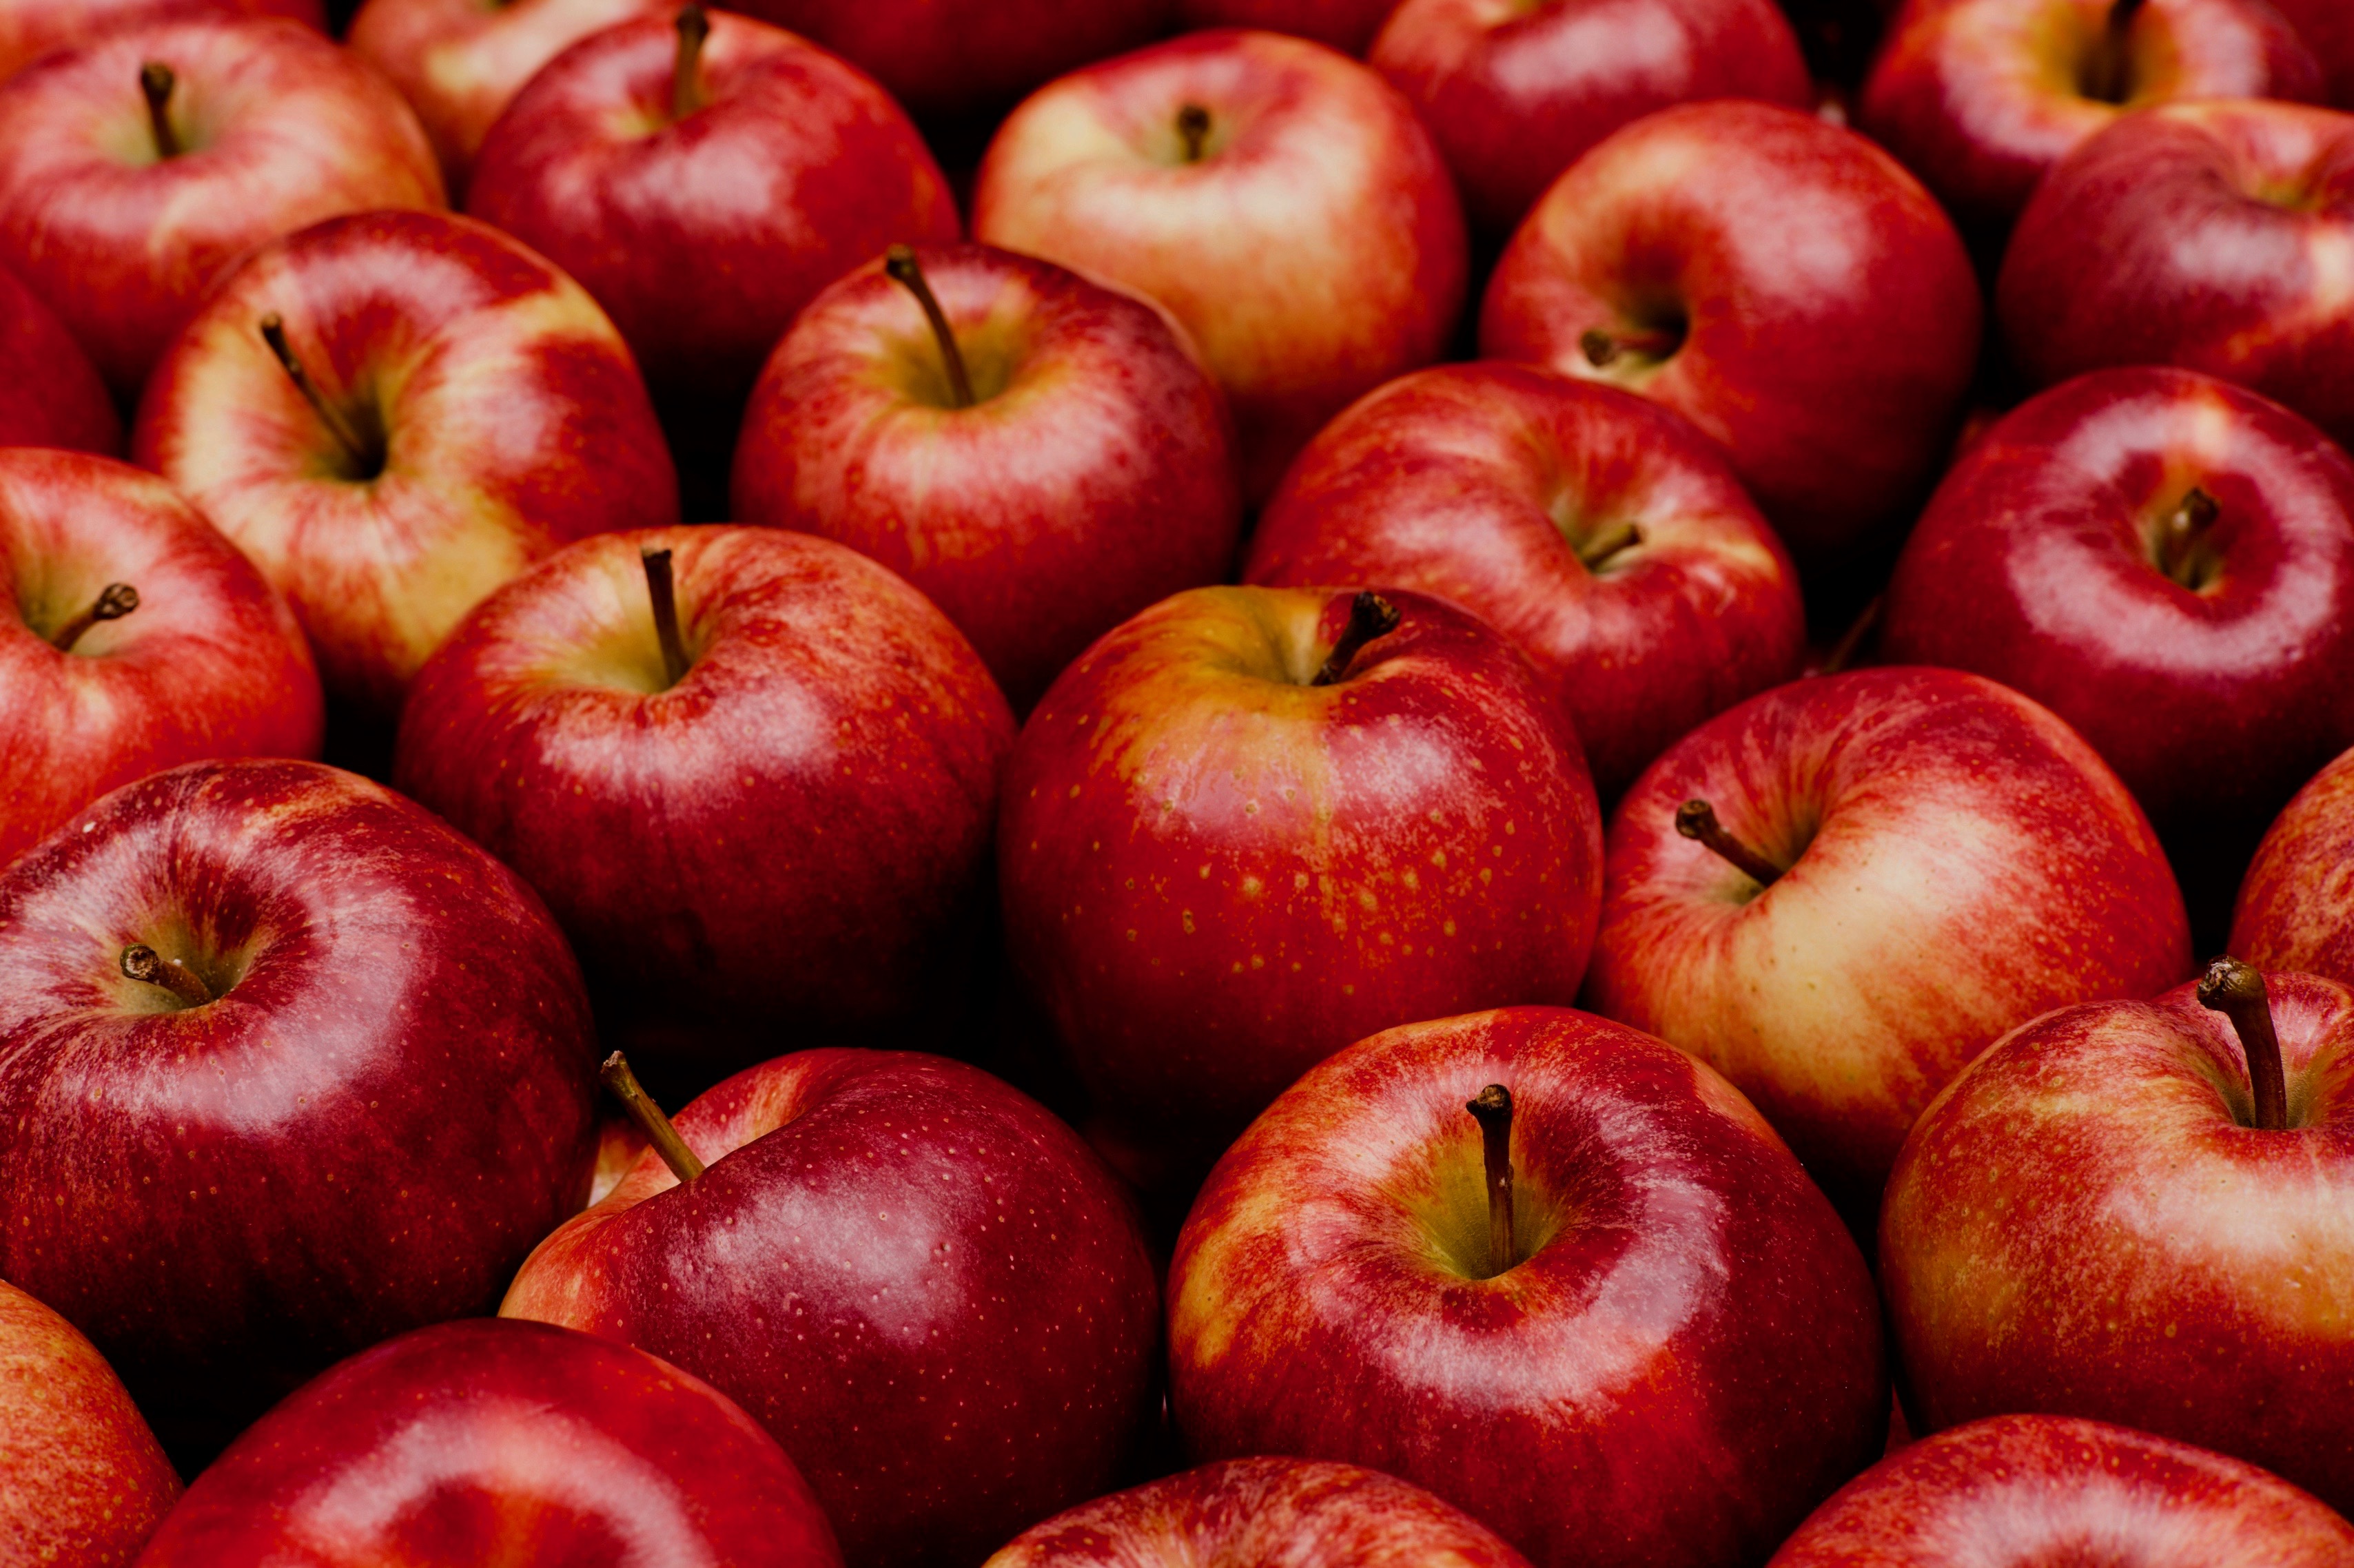 Produce Distributors of fresh Apples